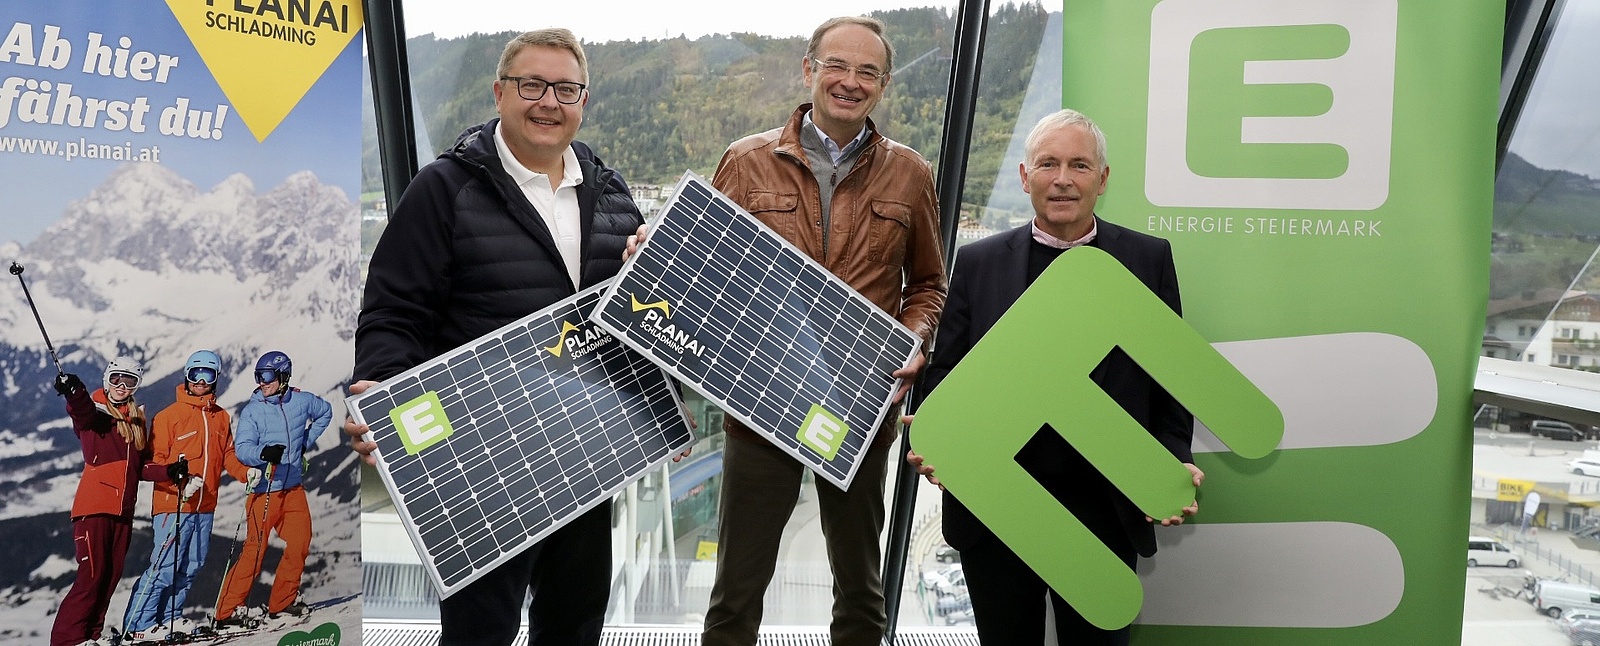 Foto: Energie Steiermark / Edi Aldrian